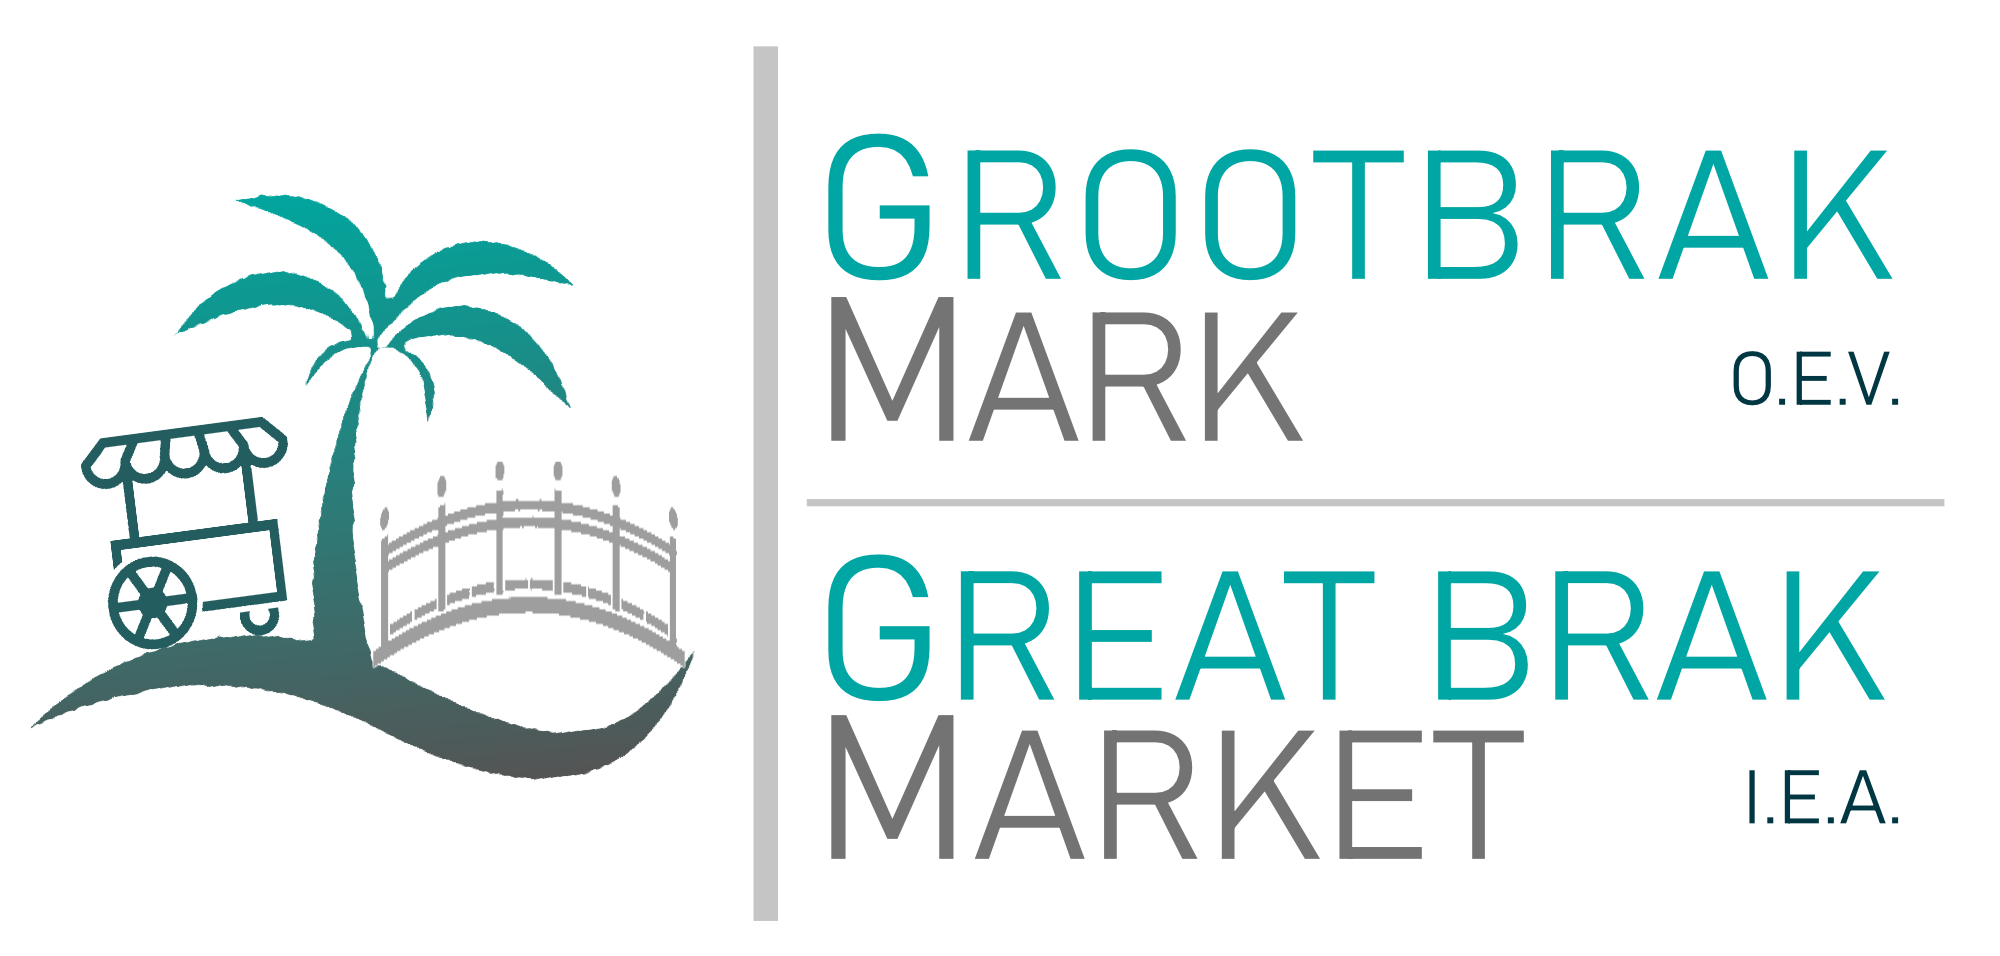 Great Brak Market Grootbrak Mark OEV IEA